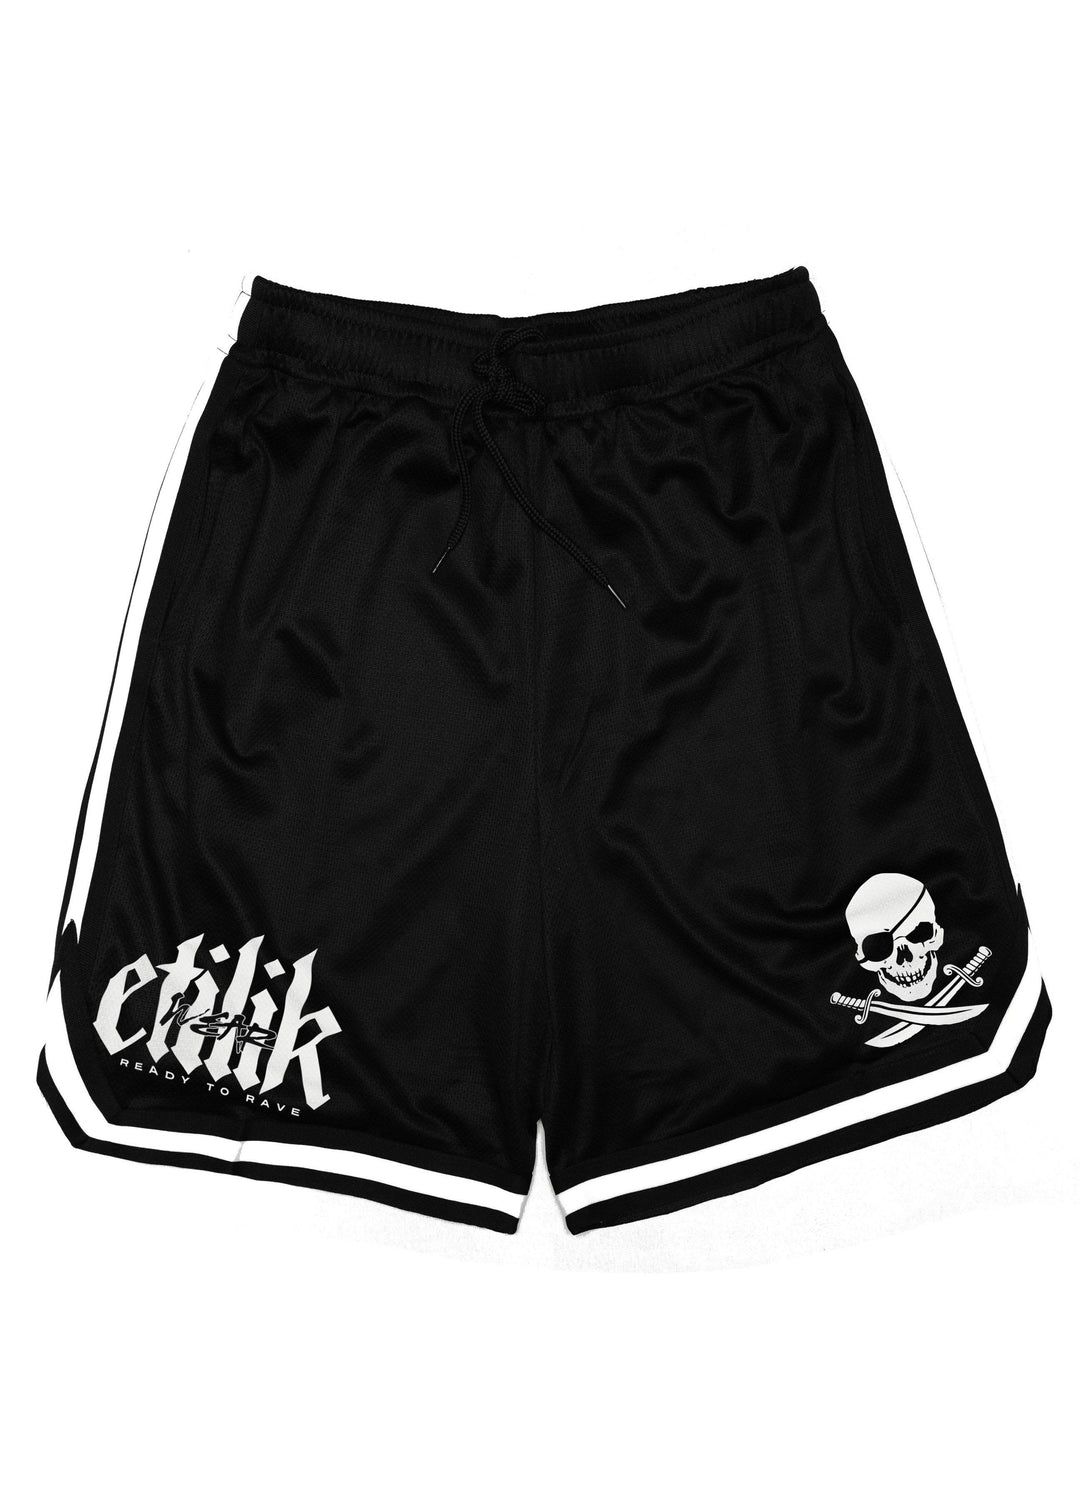 Pantalones cortos Etilik Crew BSK 2K23